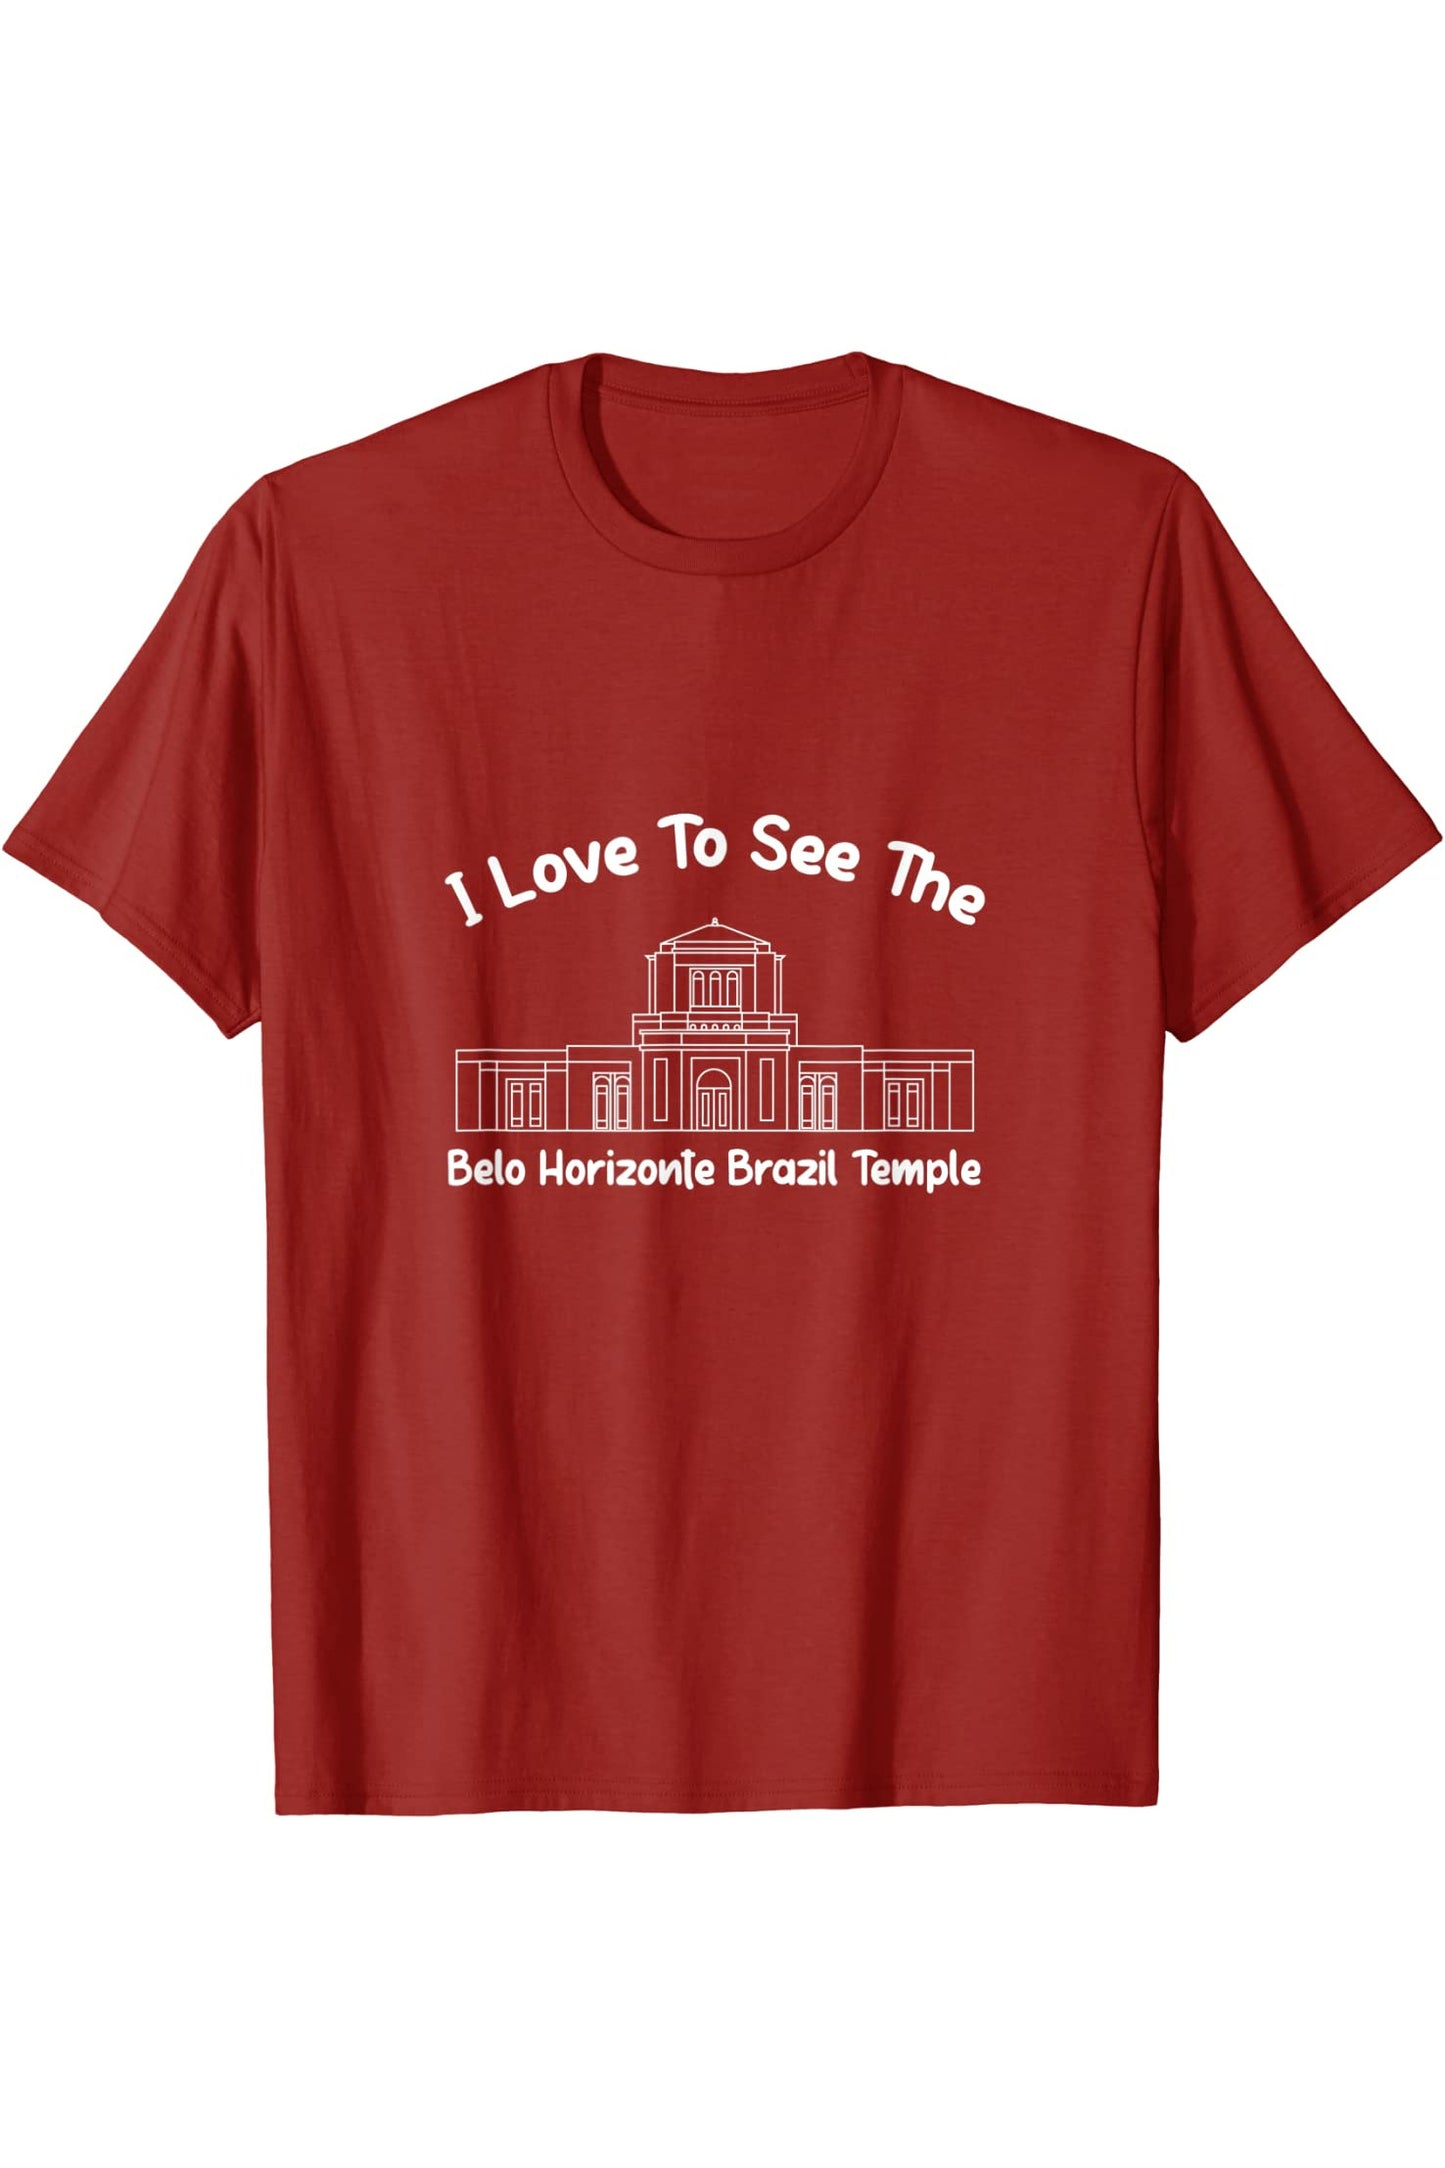 Belo Horizonte Brazil Temple T-Shirt - Primary Style (English) US